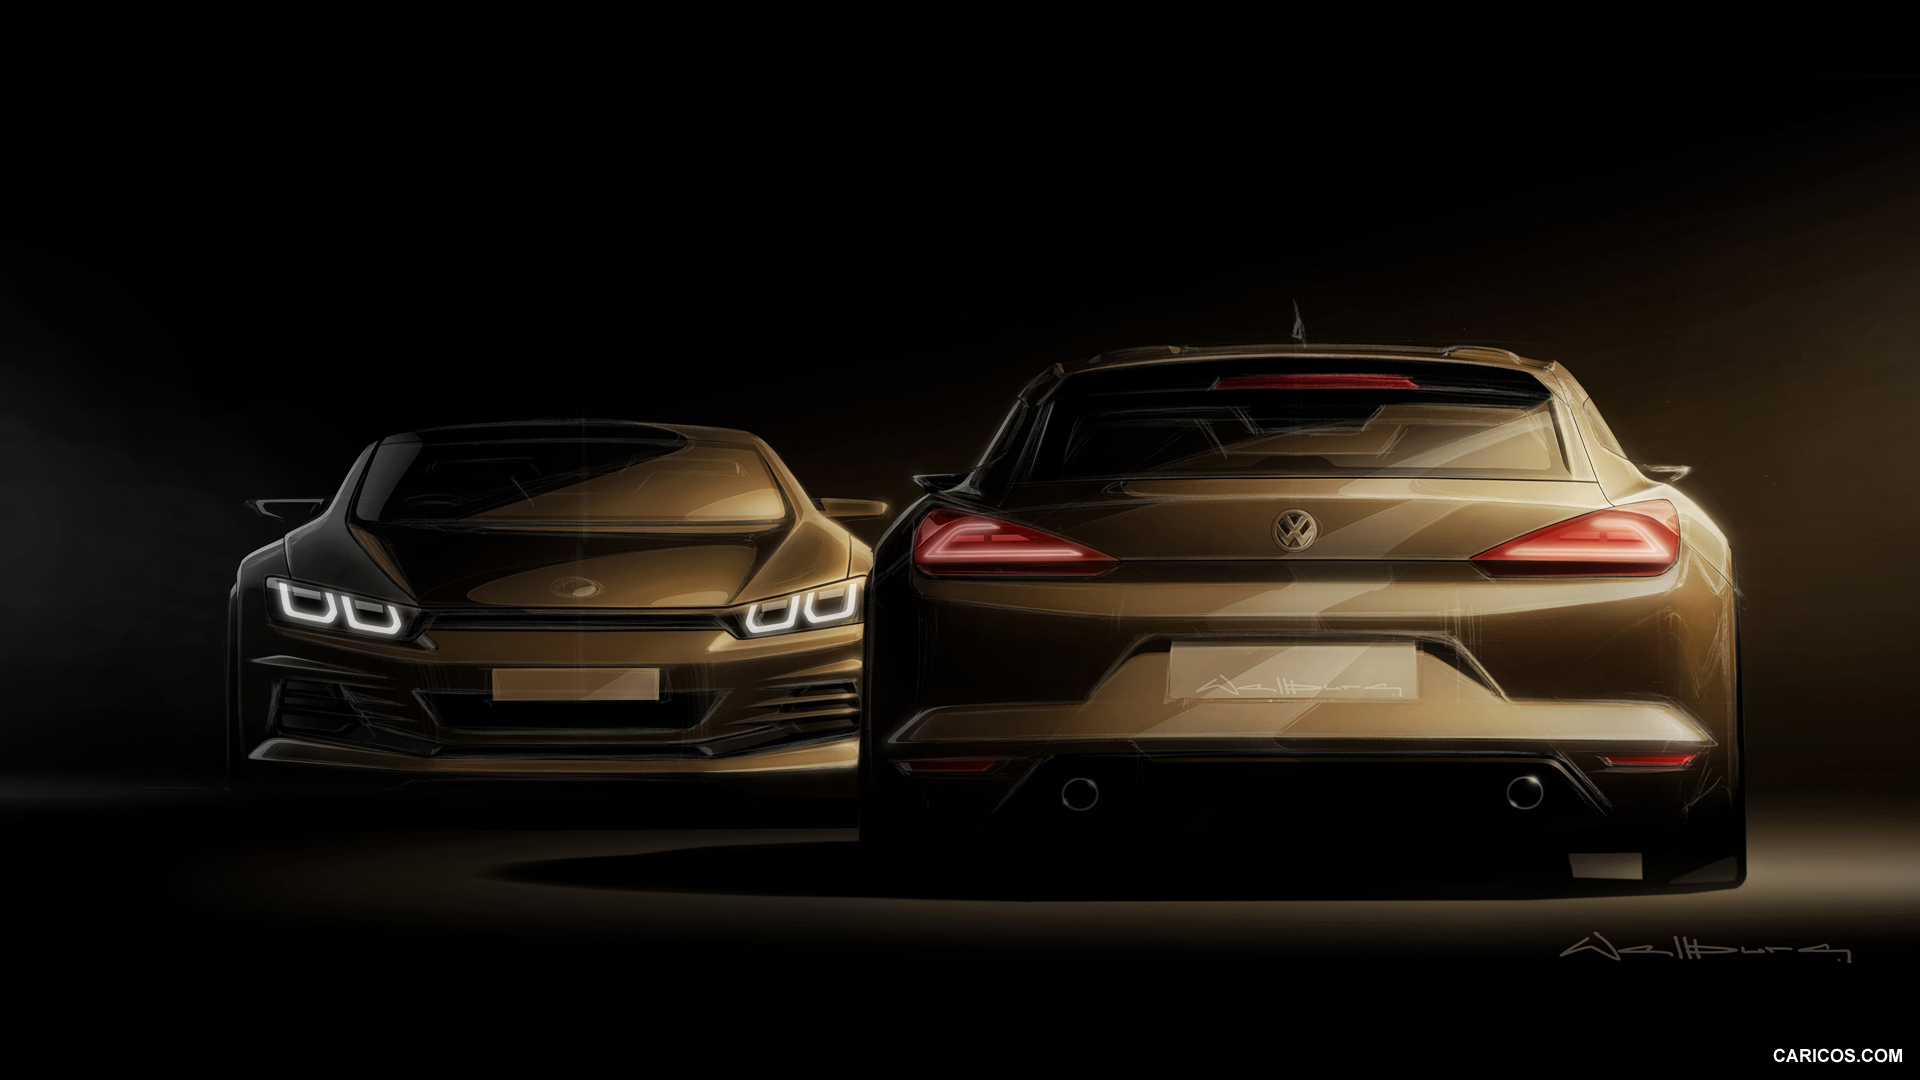 Volkswagen Scirocco Design Sketch HD Wallpaper